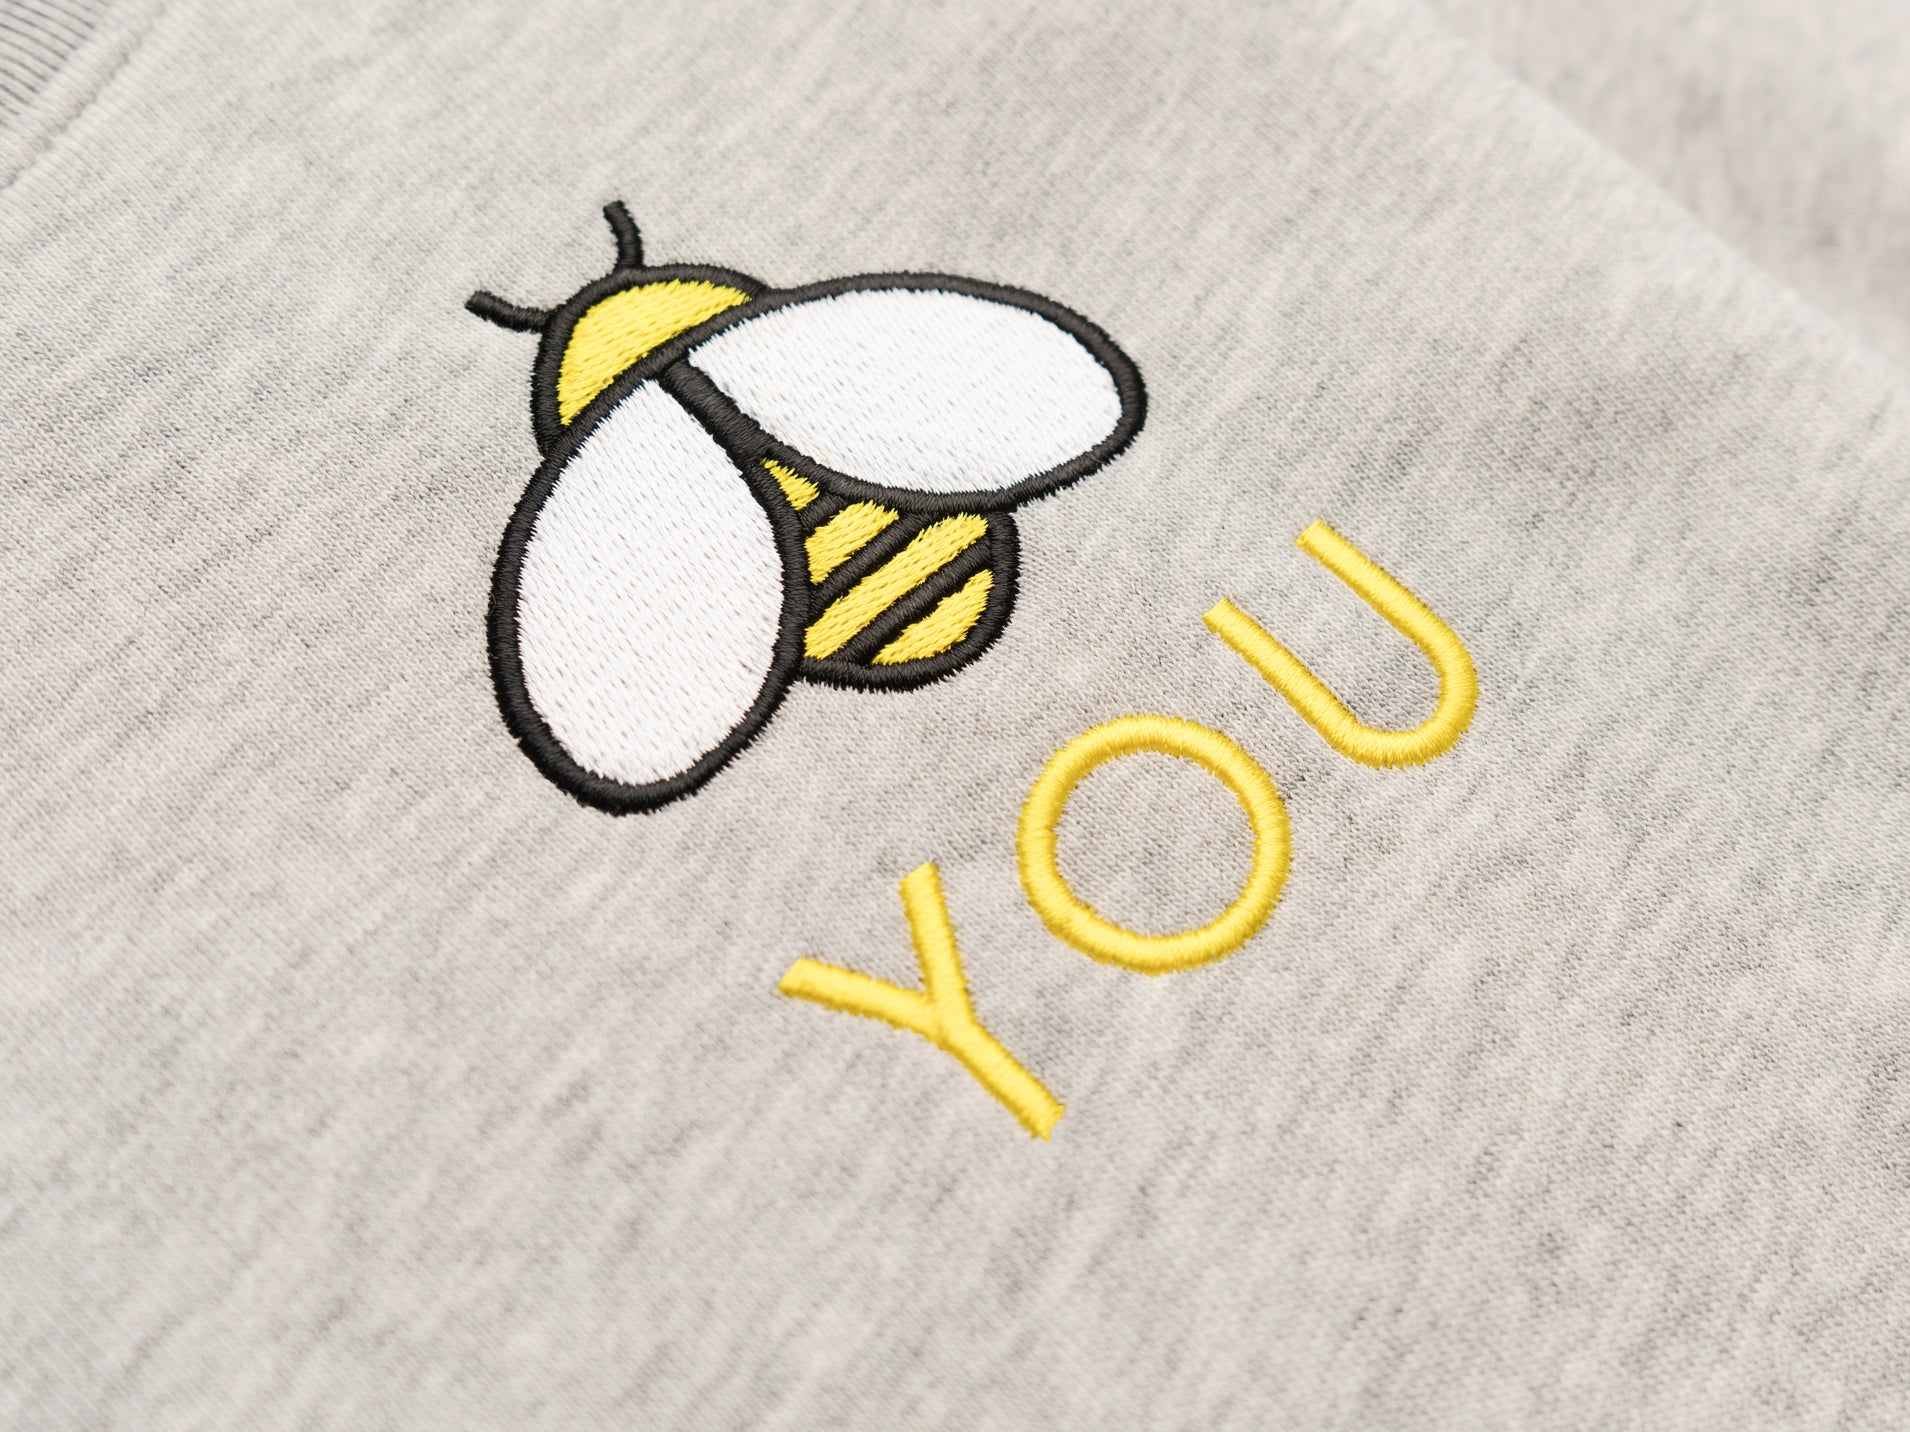 BEE YOU